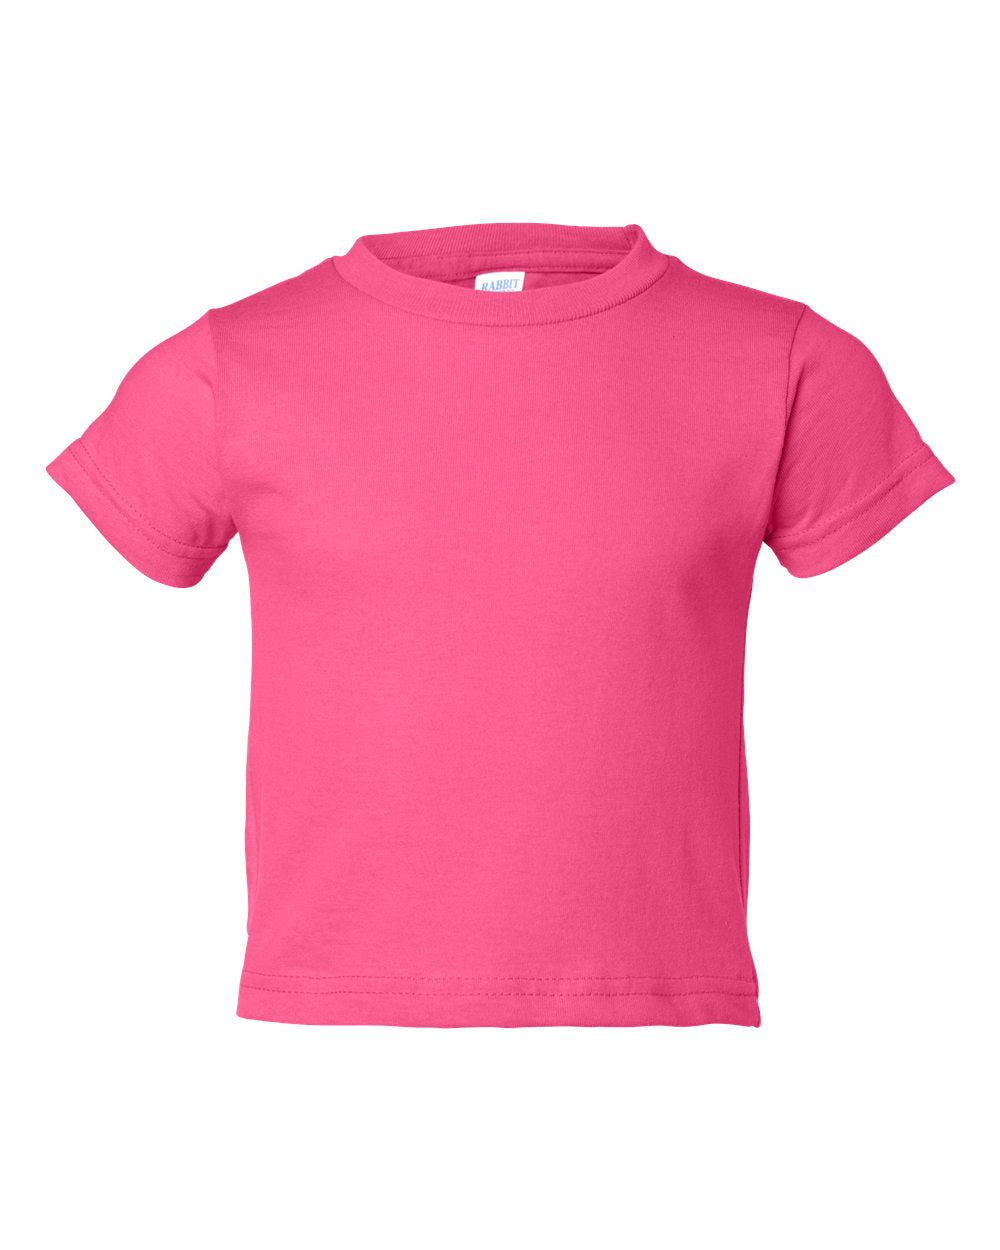 Toddler Jersey T-shirt, 100% Cotton, Hot Pink